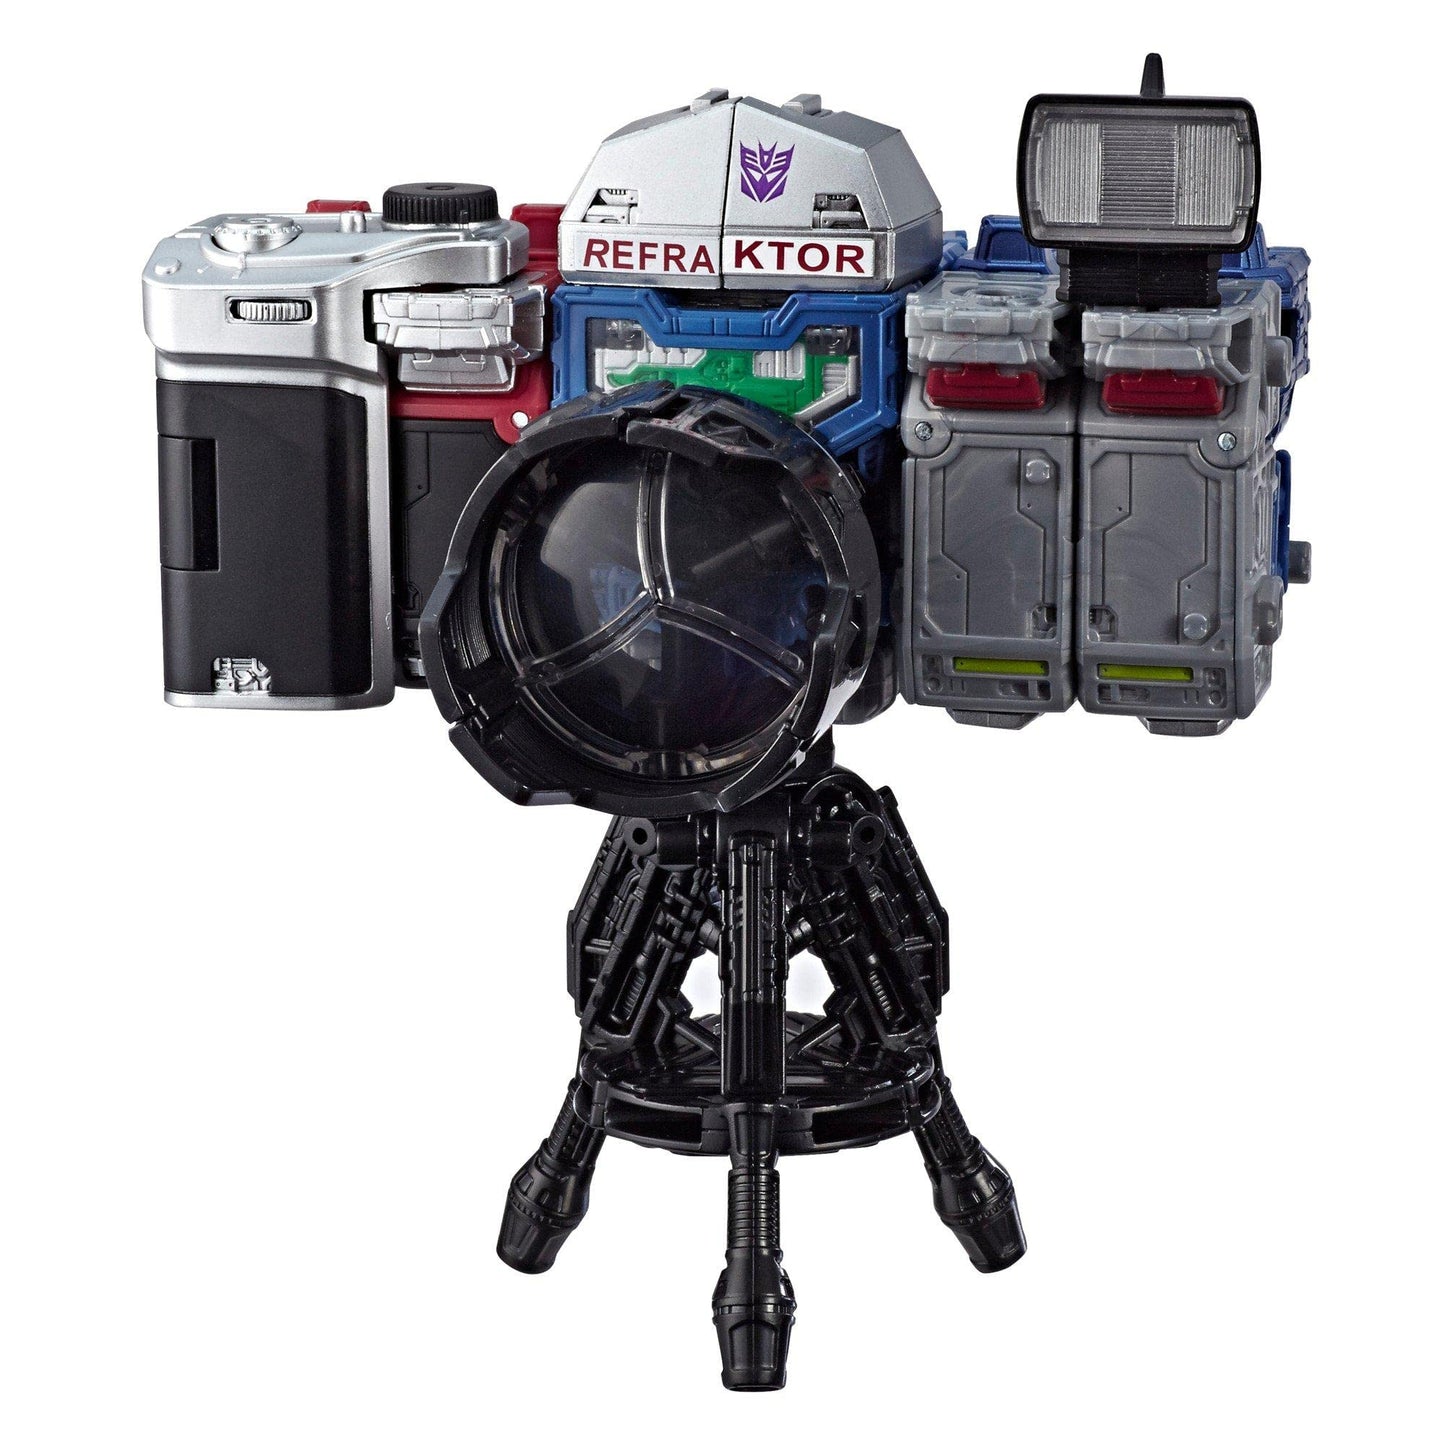 Transformers War for Cybertron: Siege Deluxe Refraktor Reconnaissance Team 3 Pack